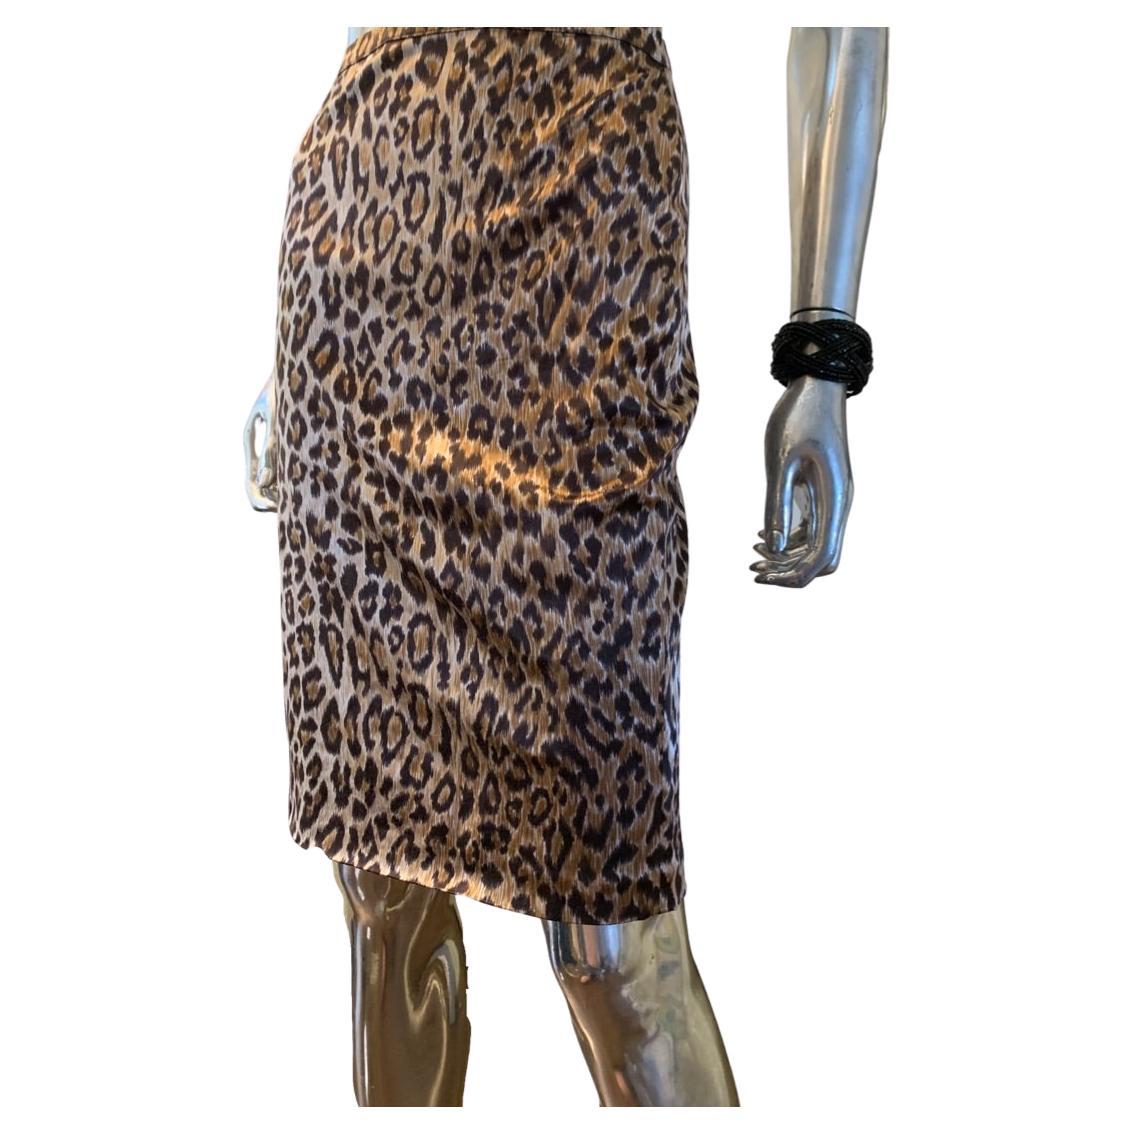 D & G Dolce Gabbana Signature "Dolce Vita" Leopard Pencil Skirt Size 4-6